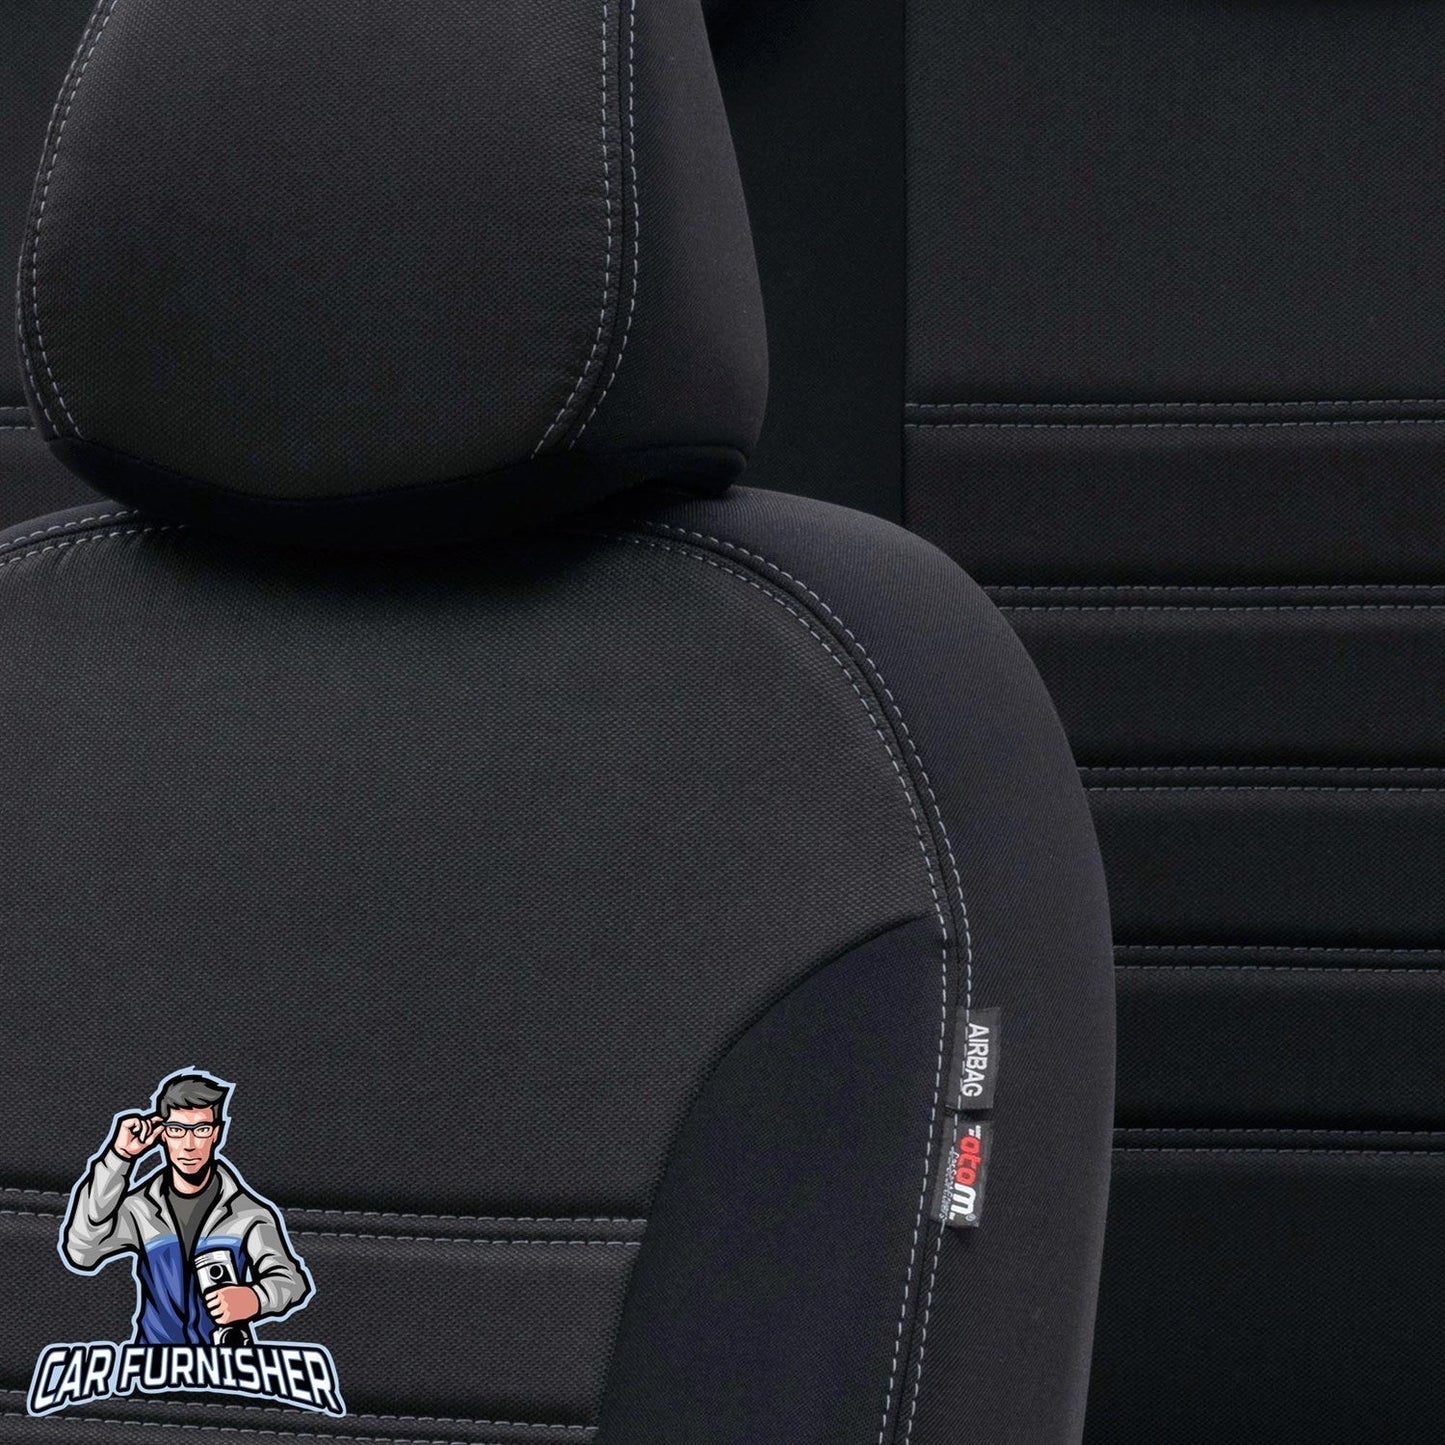 Fiat Fiorino Seat Covers Original Jacquard Design Black Jacquard Fabric